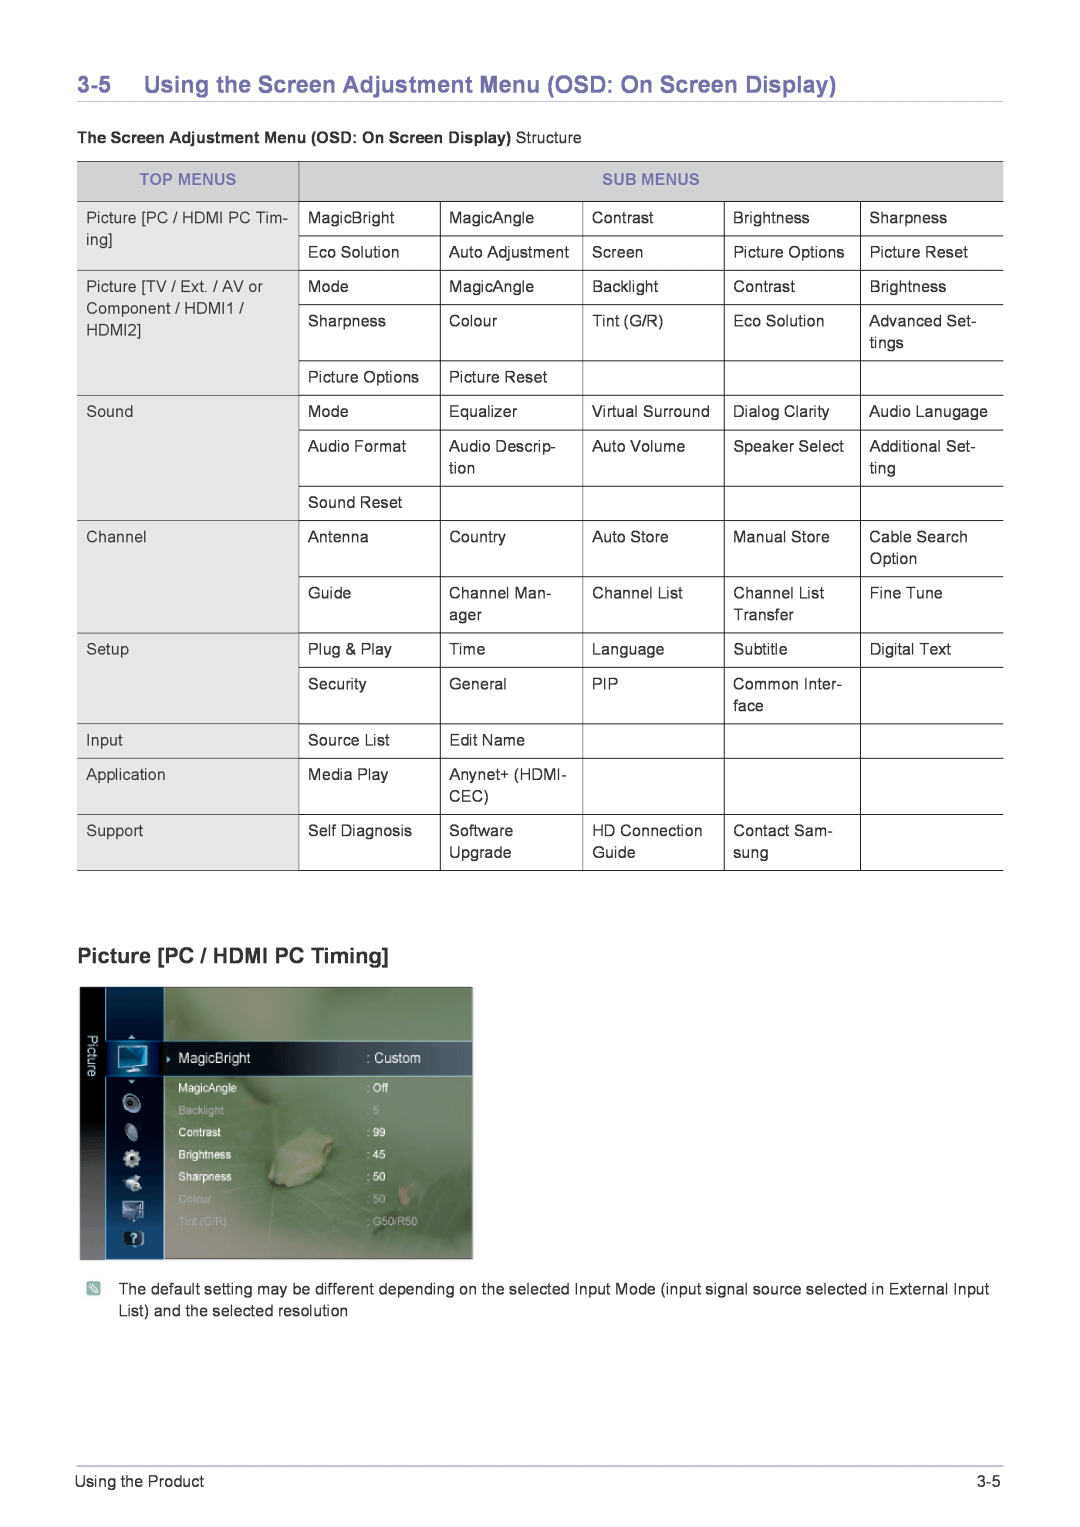 Samsung B2230HD, B2330HD, B2430HD Using the Screen Adjustment Menu OSD On Screen Display, Picture PC / HDMI PC Timing 